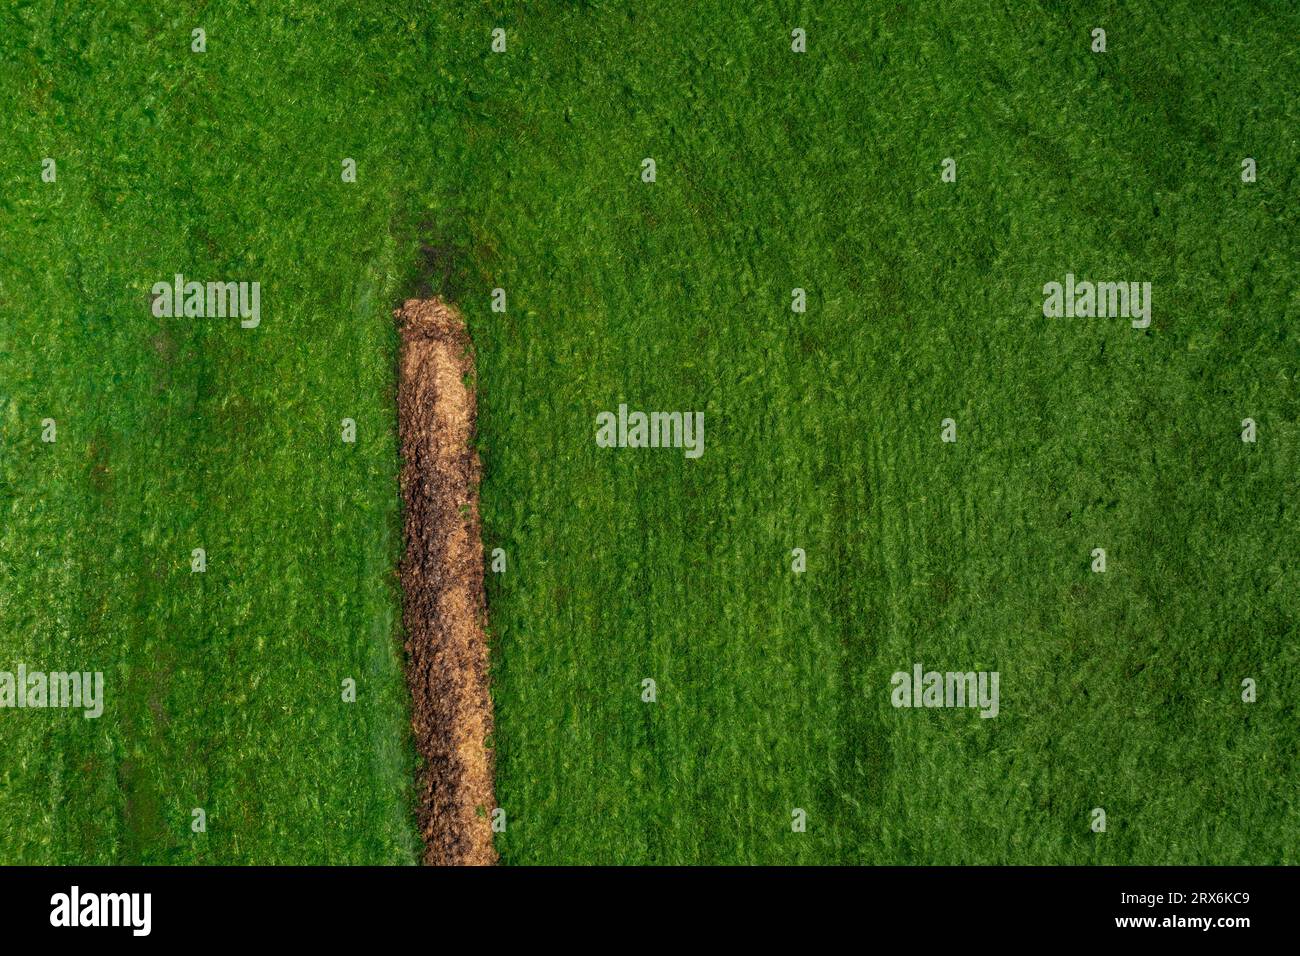 Austria, Upper Austria, Zell am Moos, Drone view of dung heap in green field Stock Photo